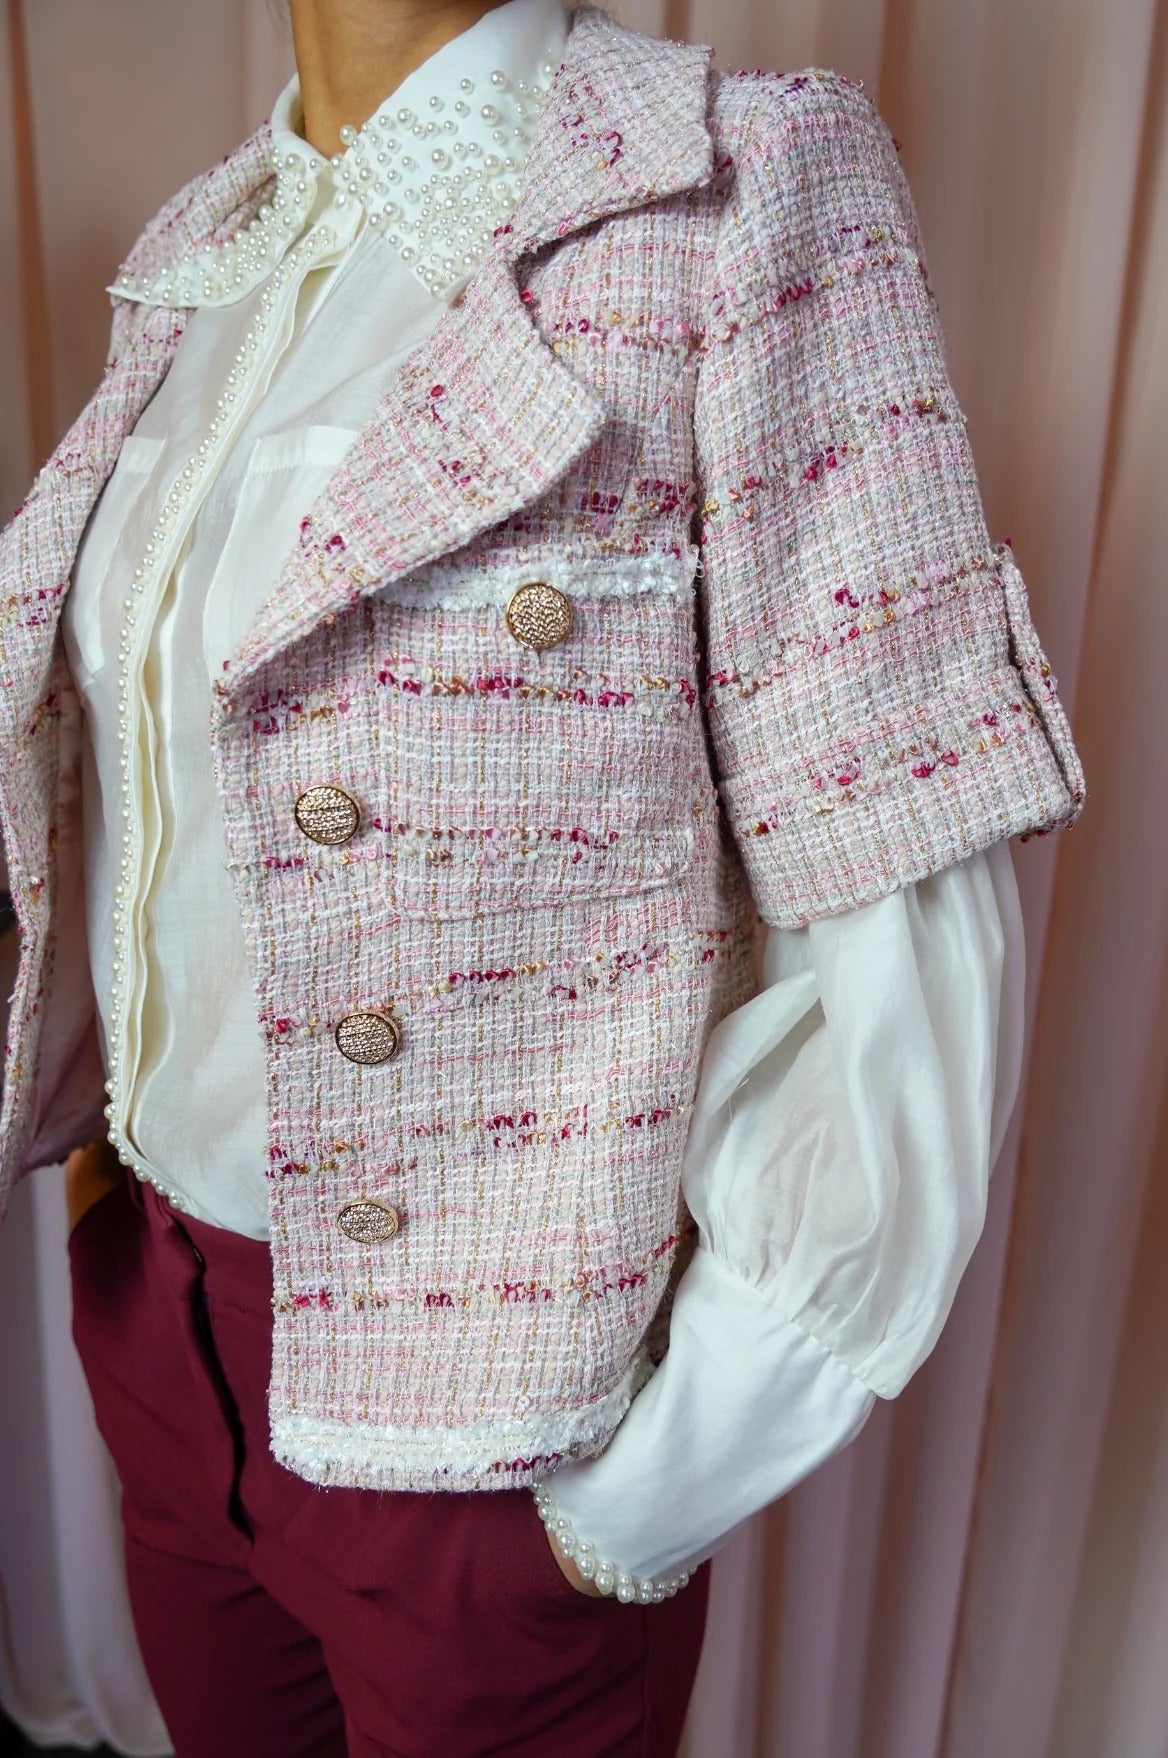 Milano jacket pink tweed